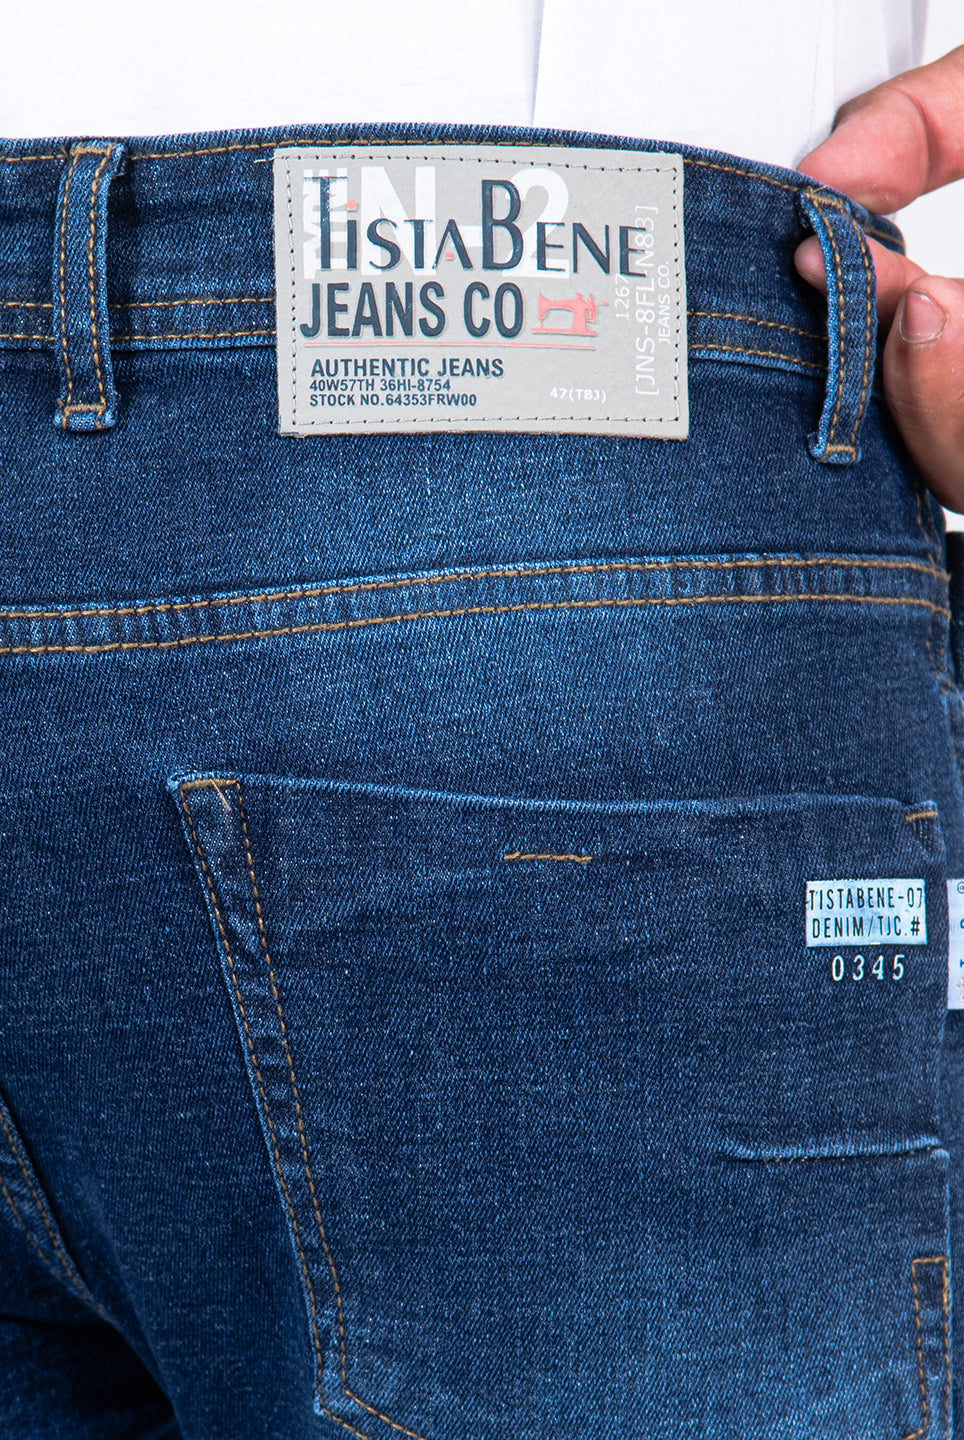 new denim jeans